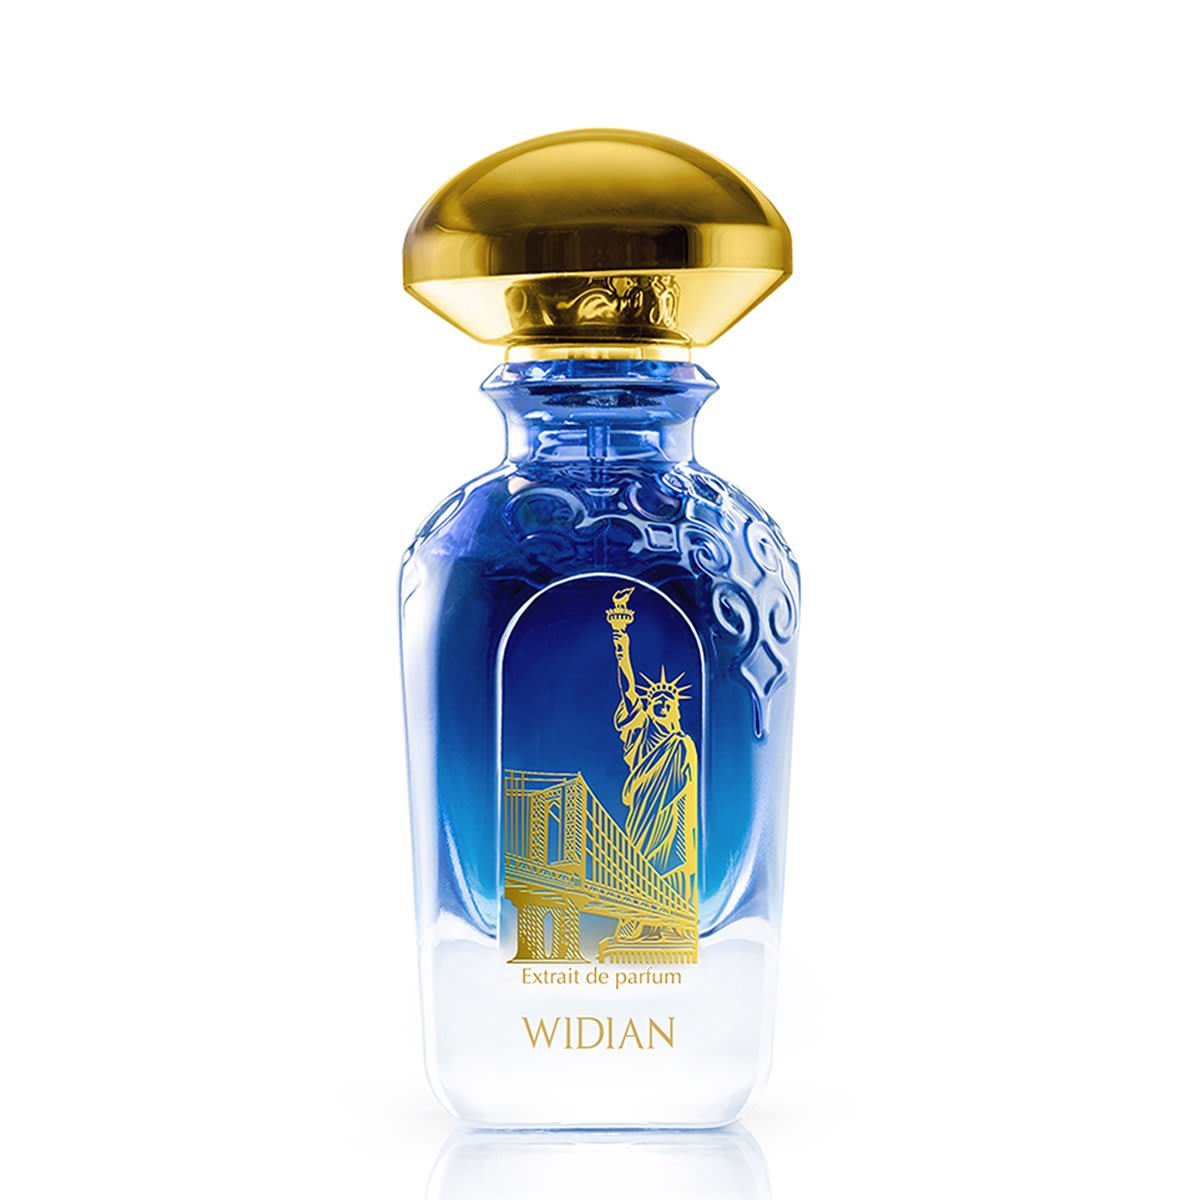 Widian New York Parfum